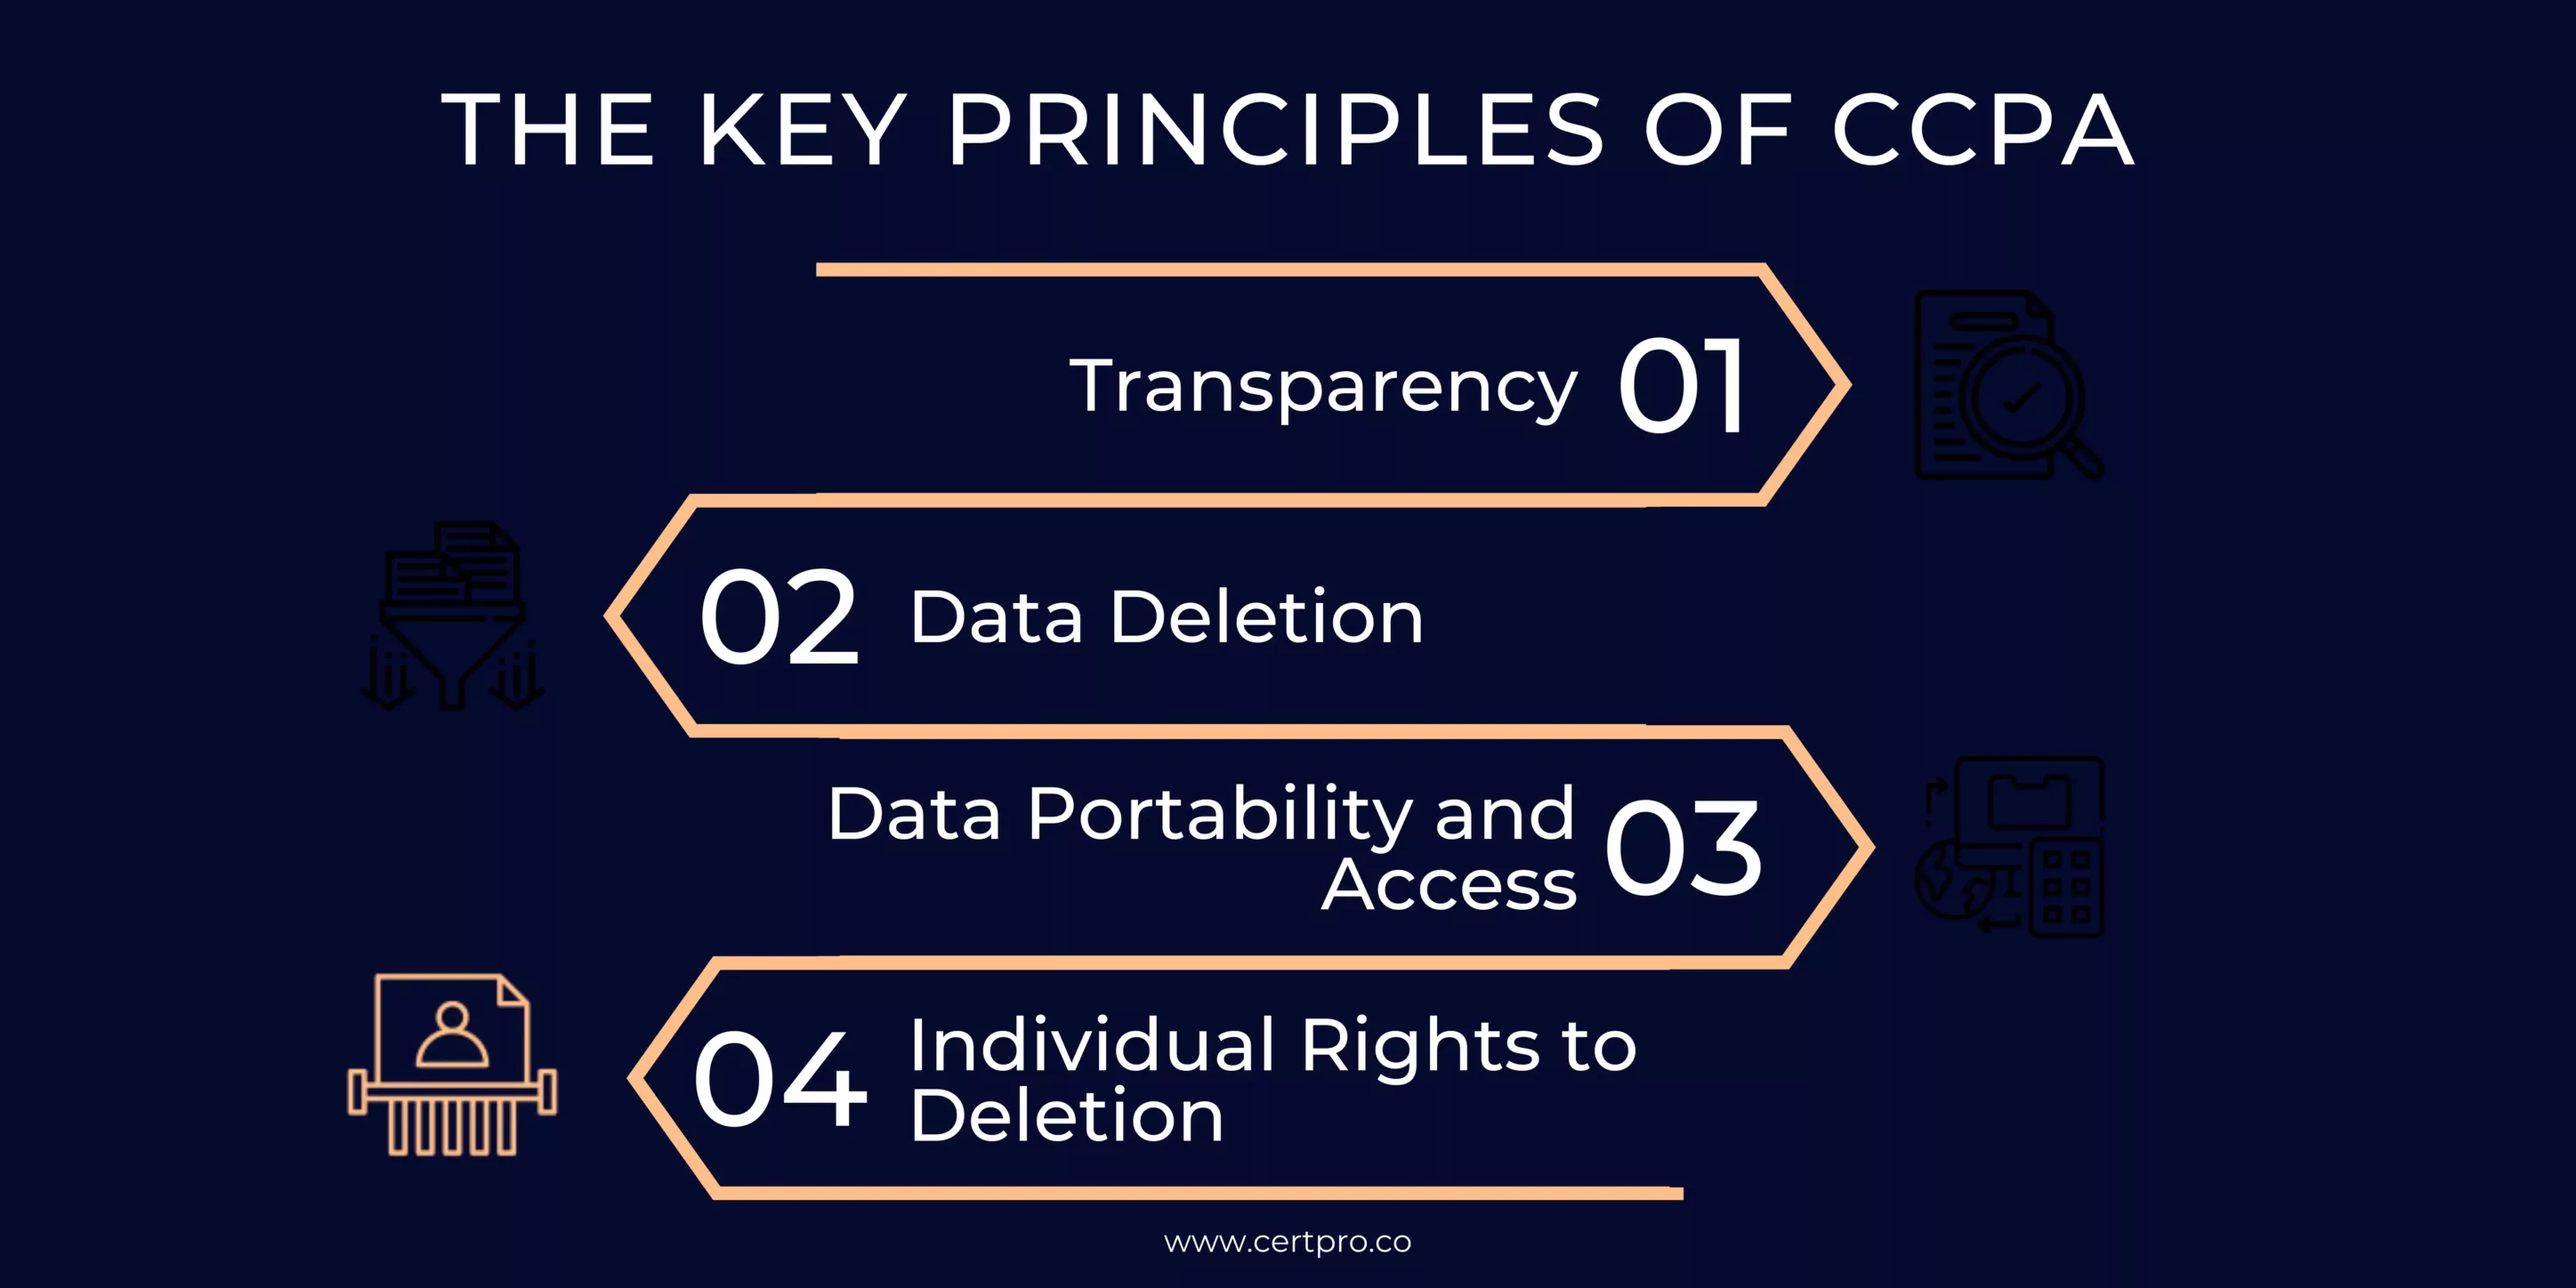 KEY PRINCIPLES OF CCPA